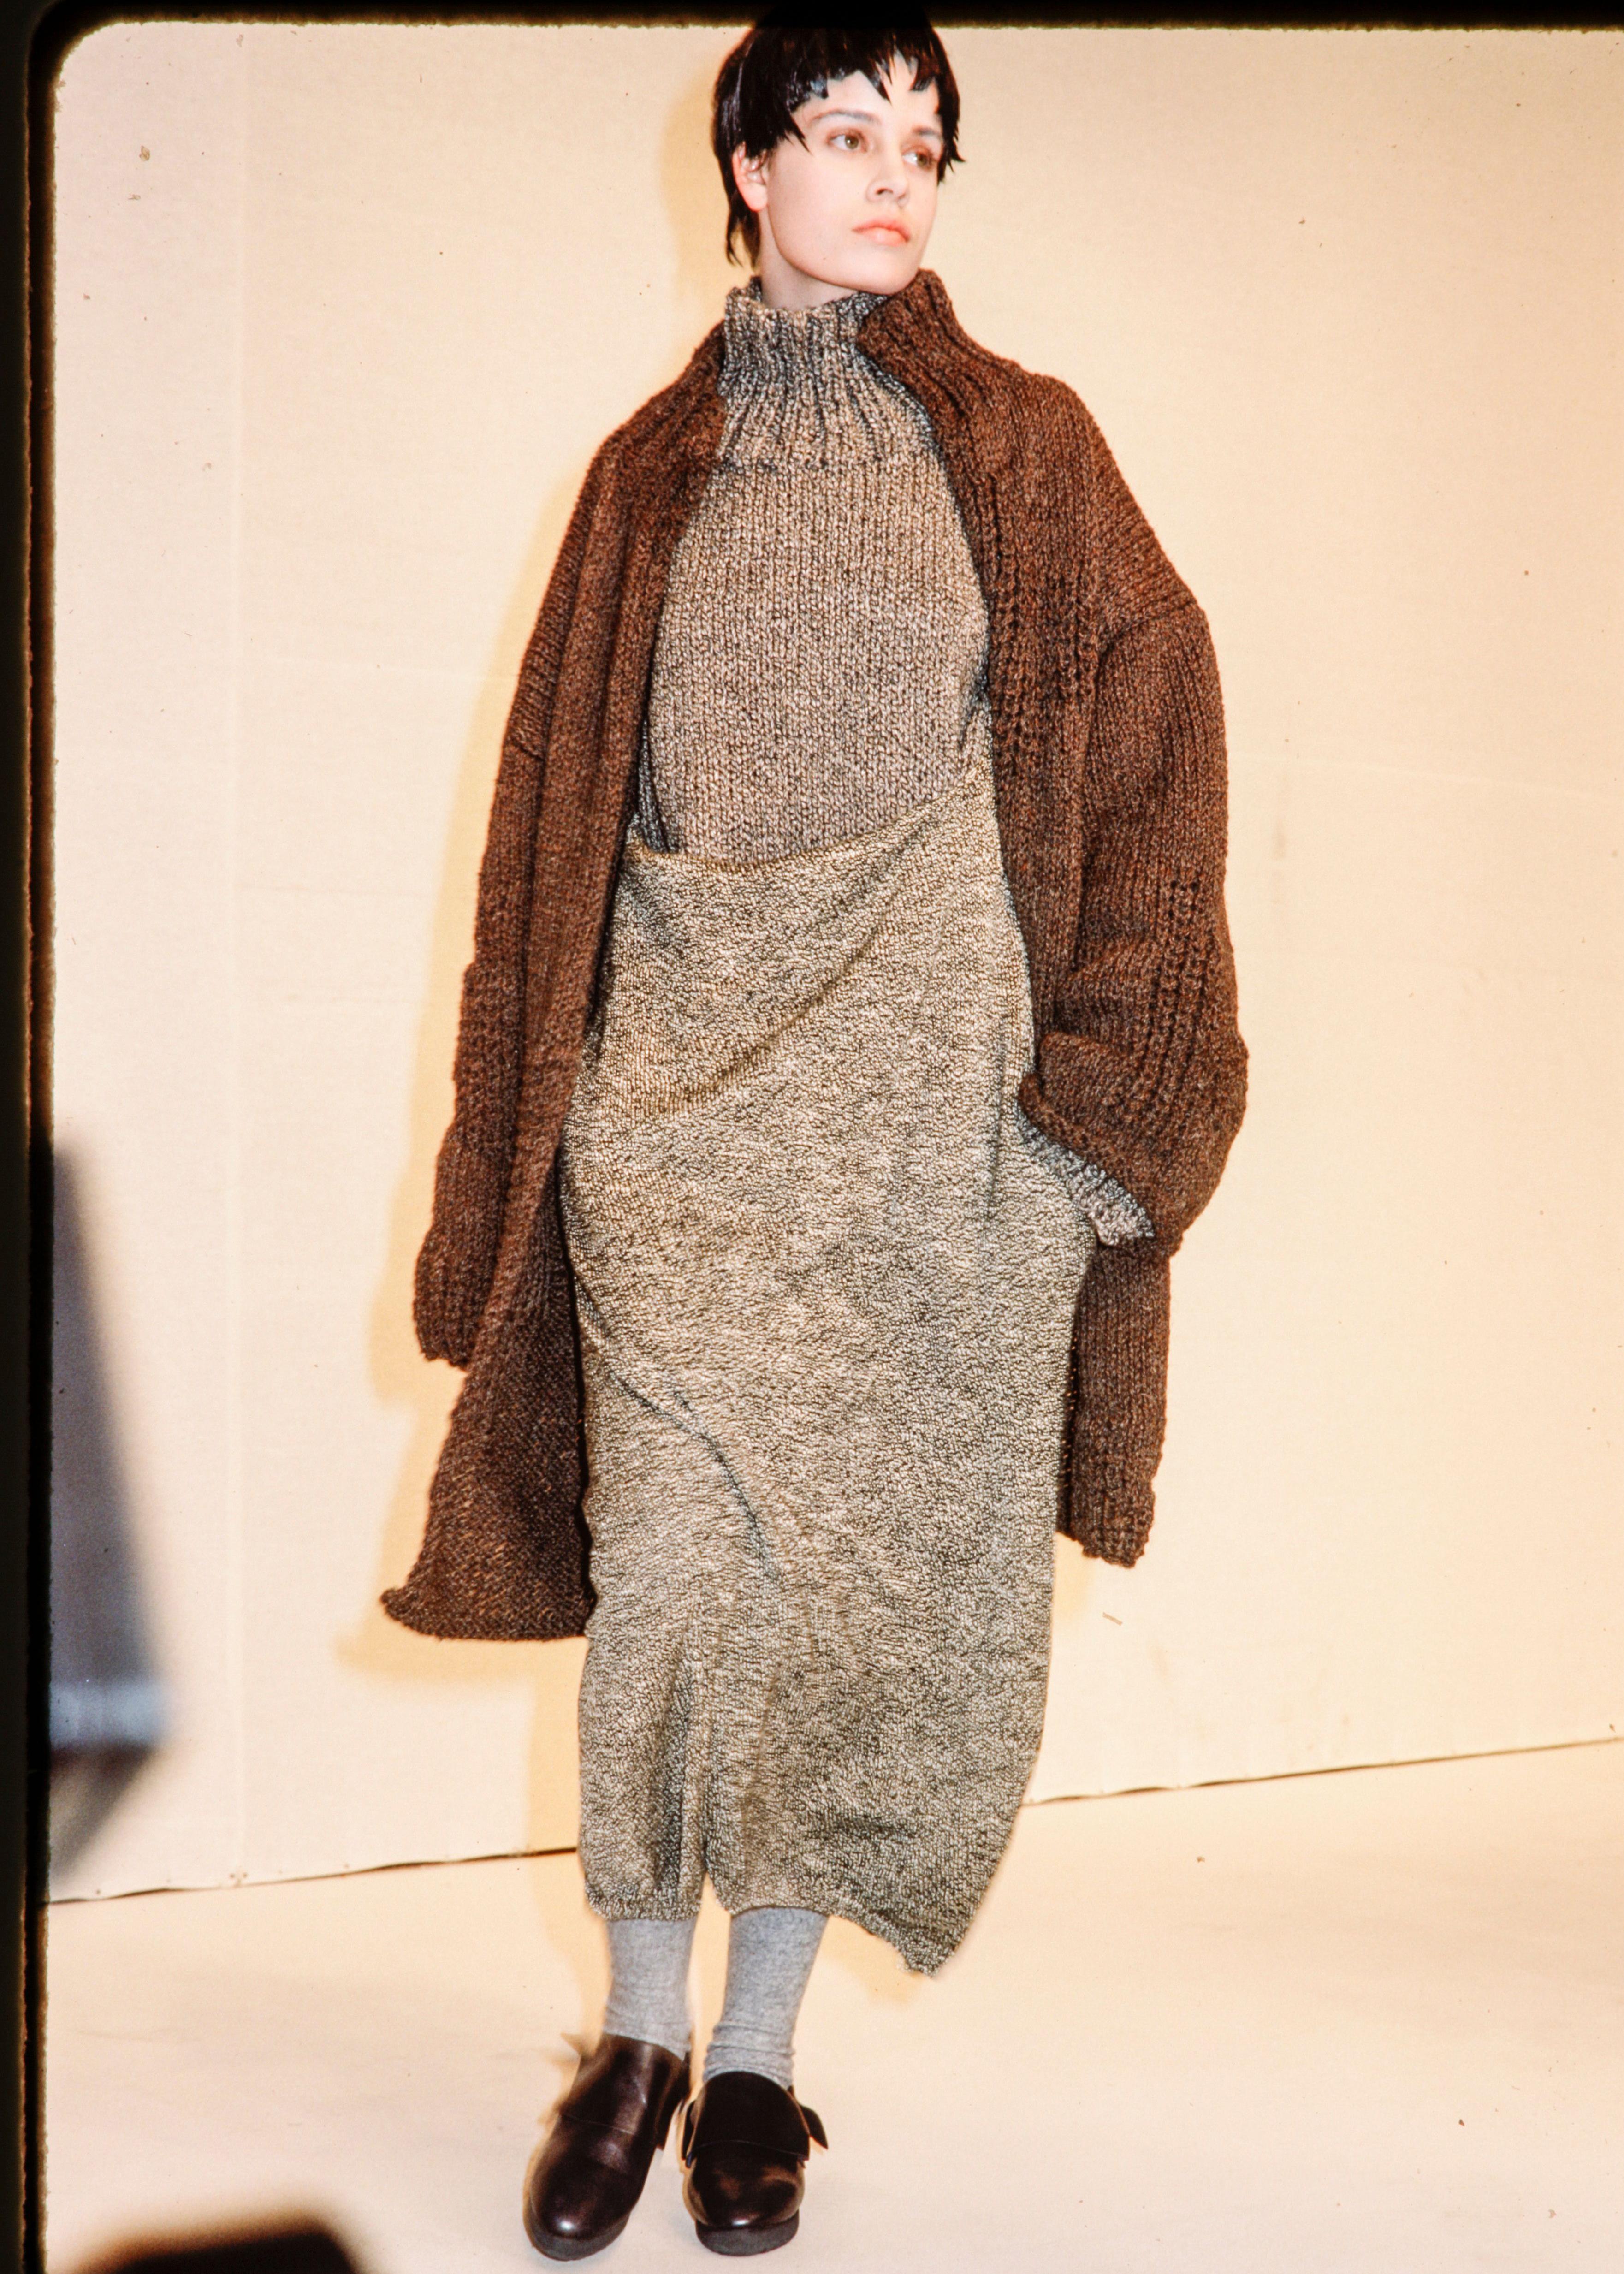 Yohji Yamamoto brown knitted wool oversized cardigan and turtleneck sweater.

Fall-Winter 1984